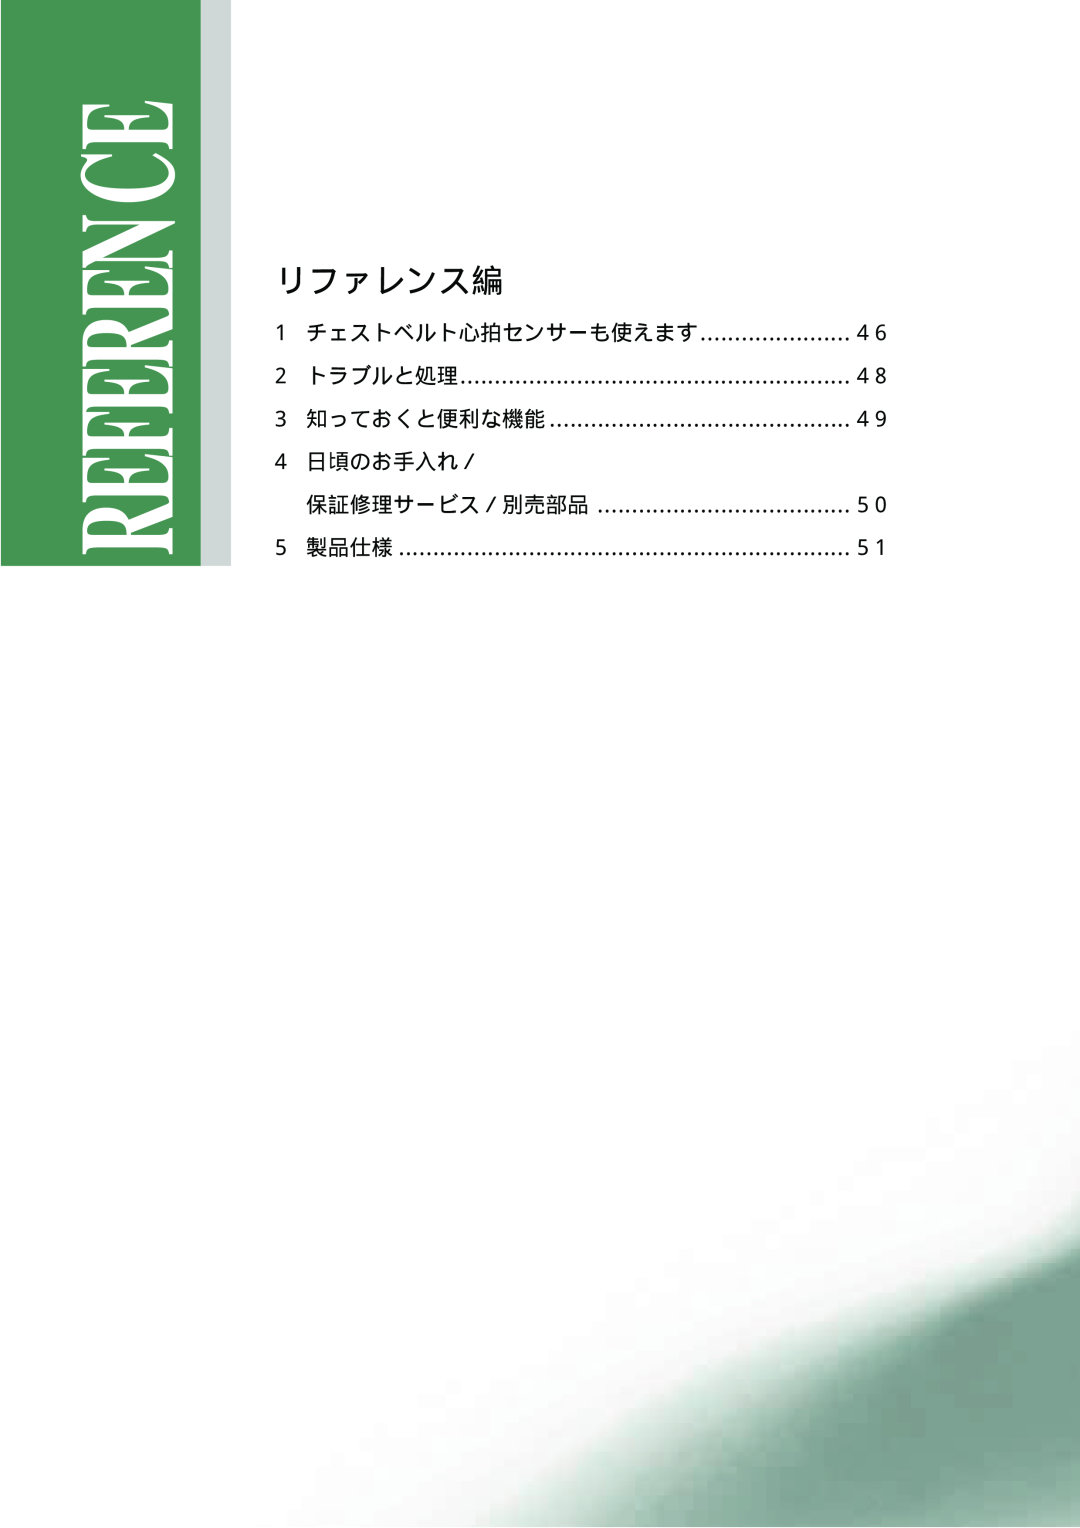 Cateye EC-F400 manual リファレンス編, Reference, 日頃のお手入れ／ 